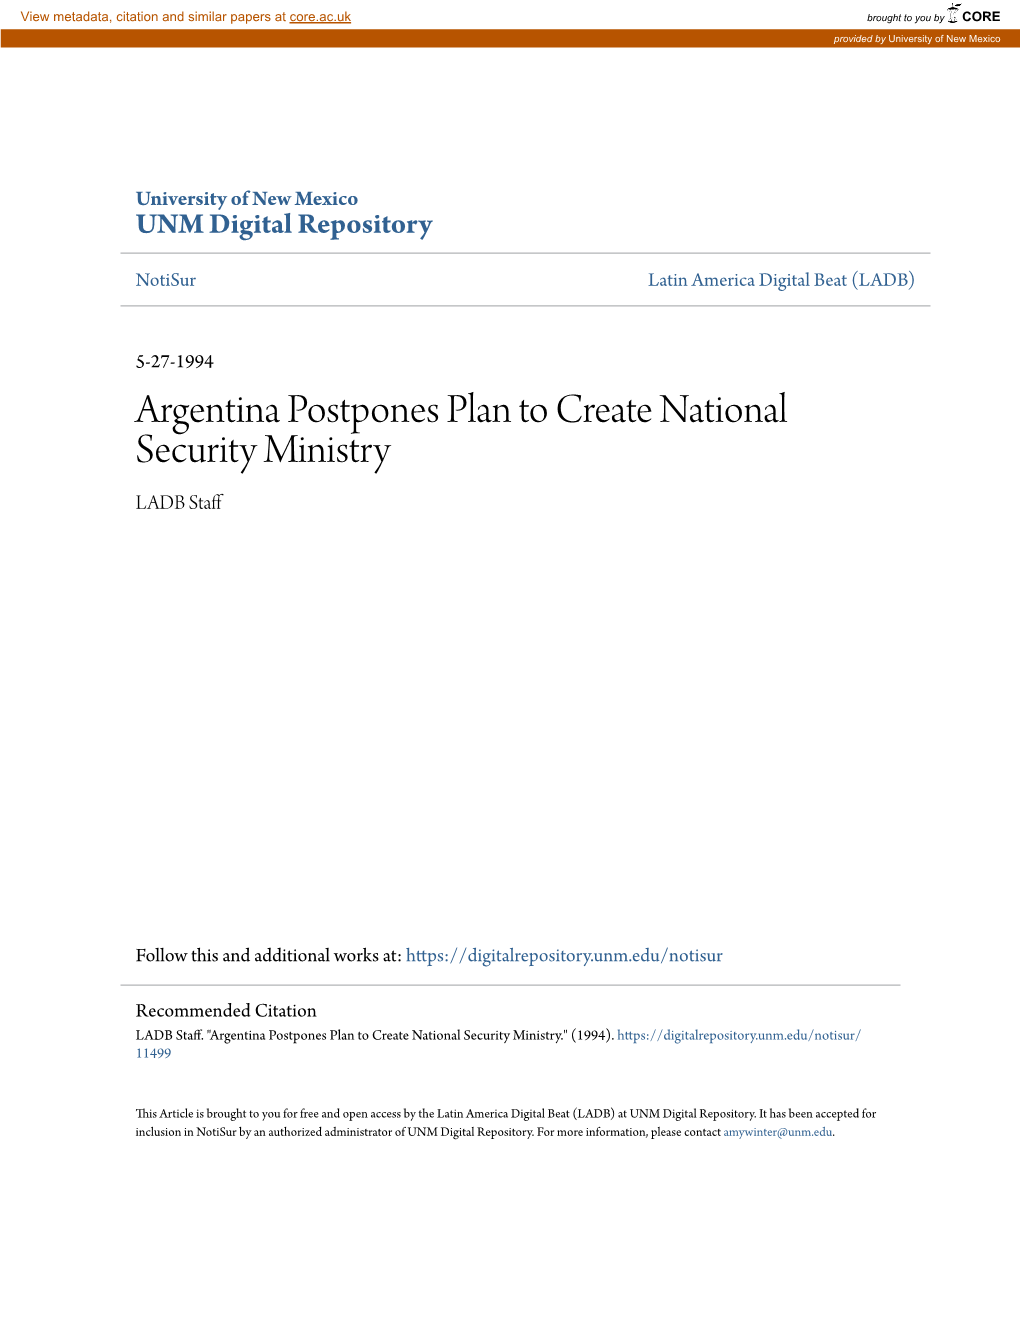 Argentina Postpones Plan to Create National Security Ministry LADB Staff